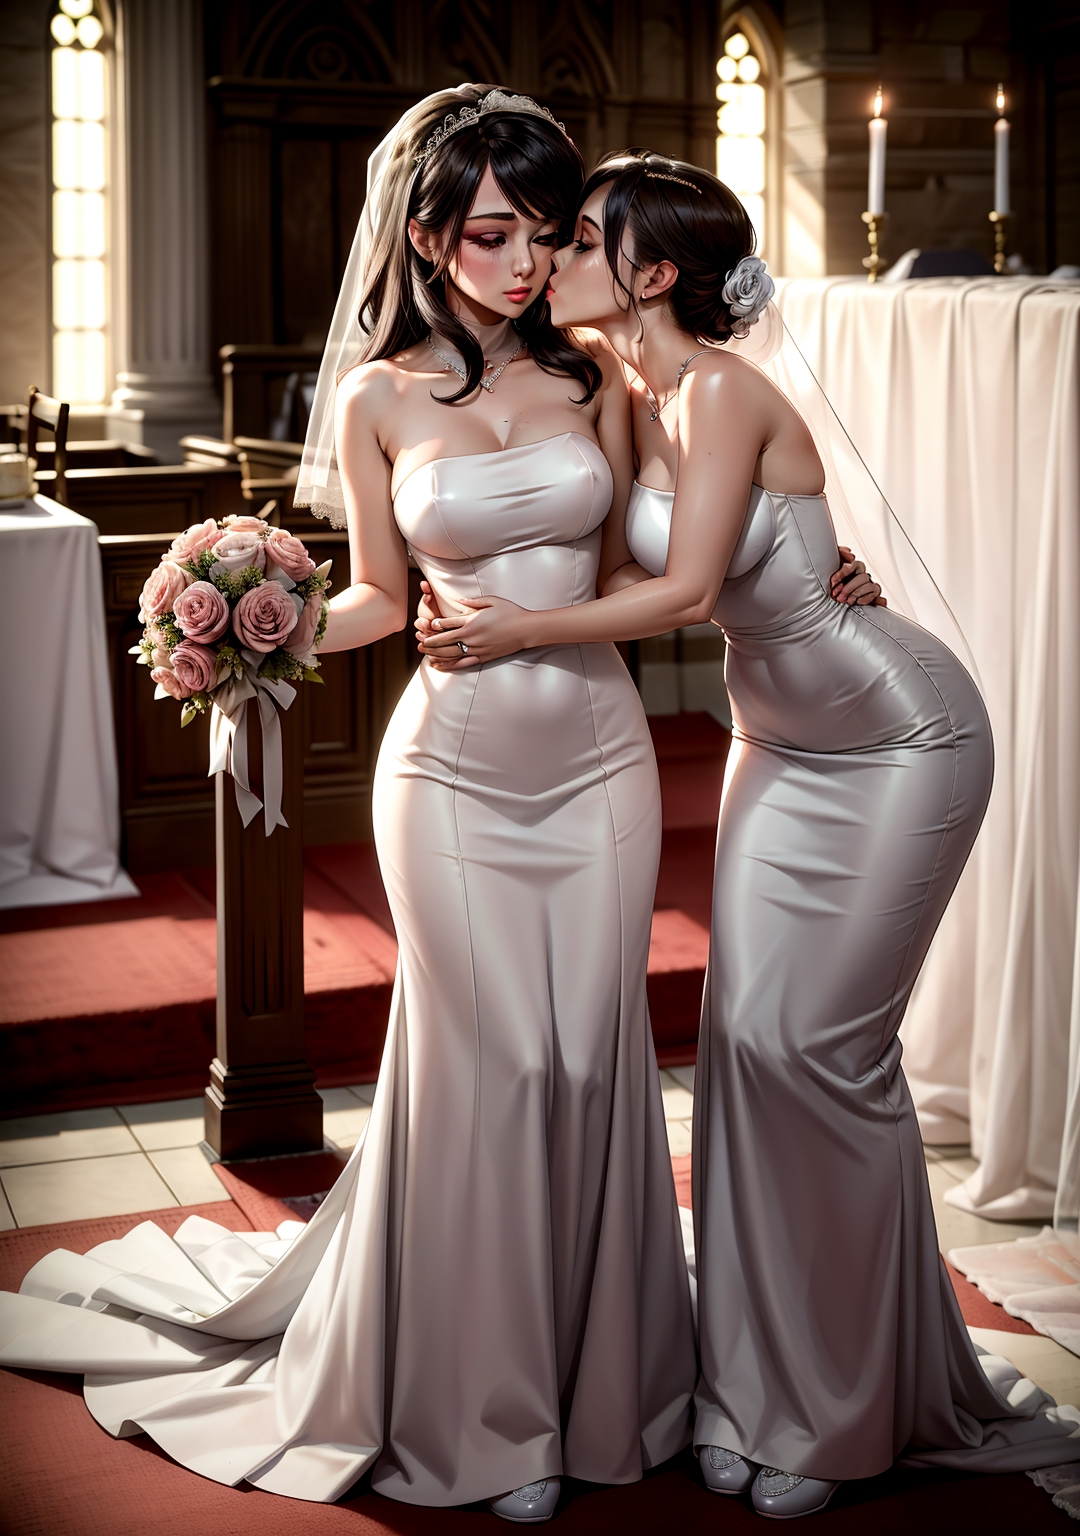 wetlook bridal undergarments by chryslerfire on DeviantArt